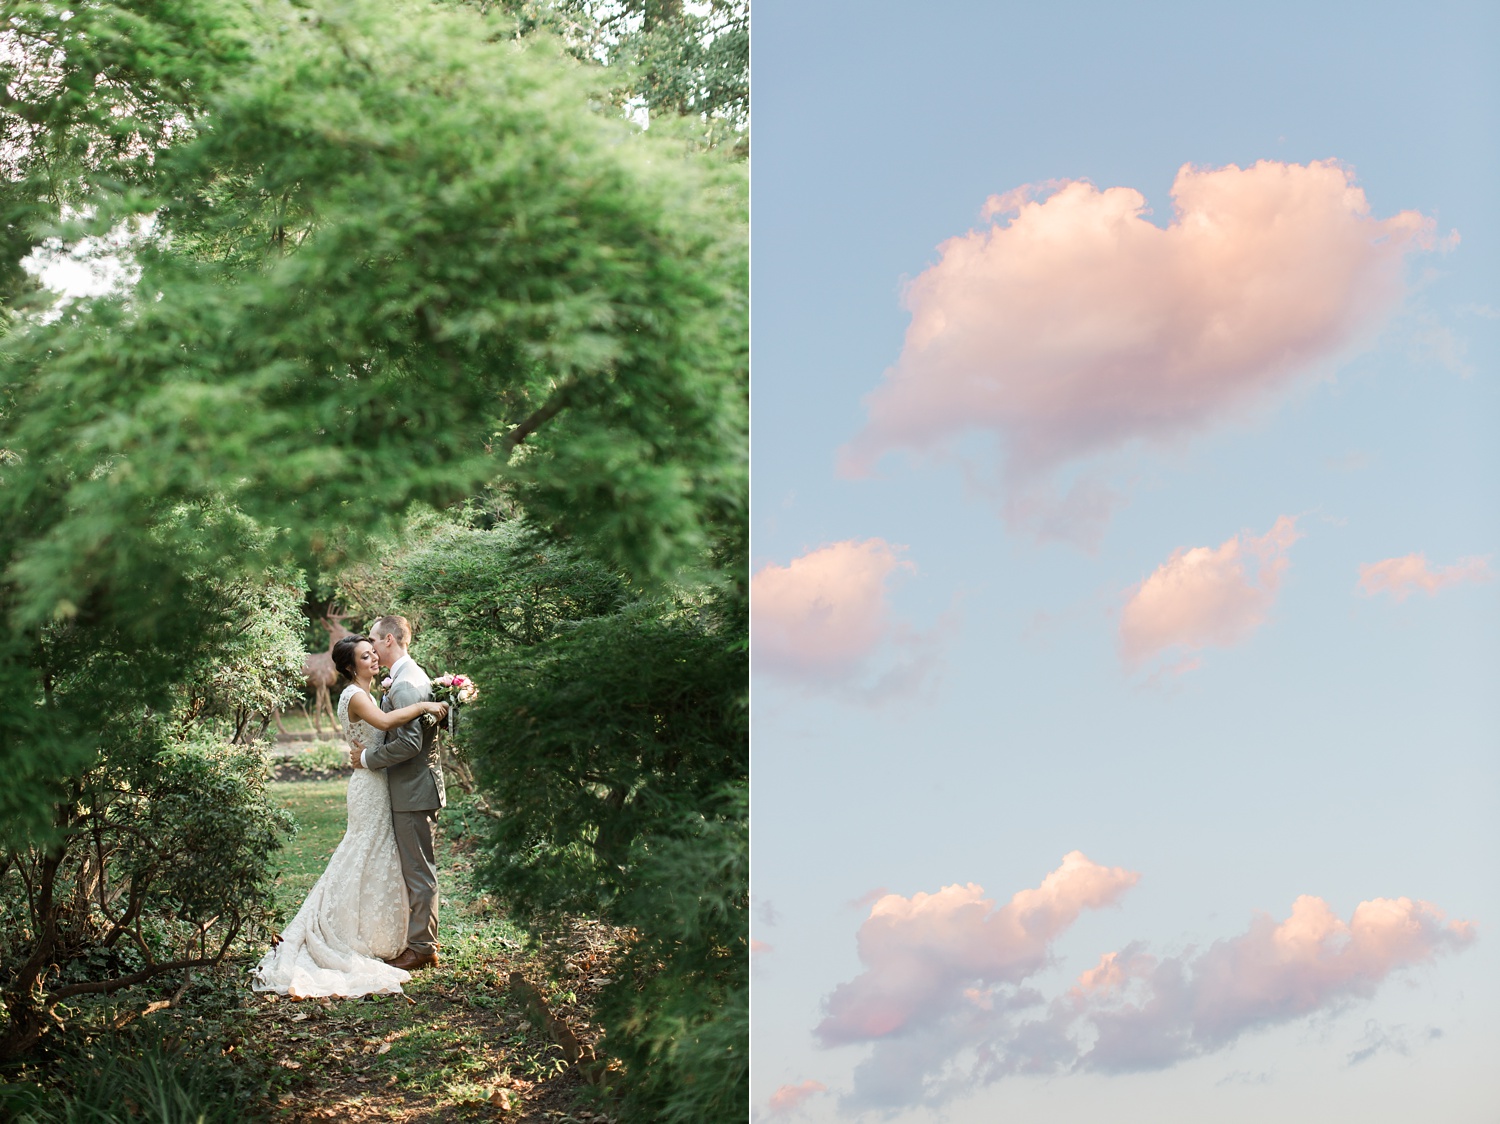 Glen Foerd Mansion Wedding Photography | Romantic Summer Garden Wedding | Nicole and Jason